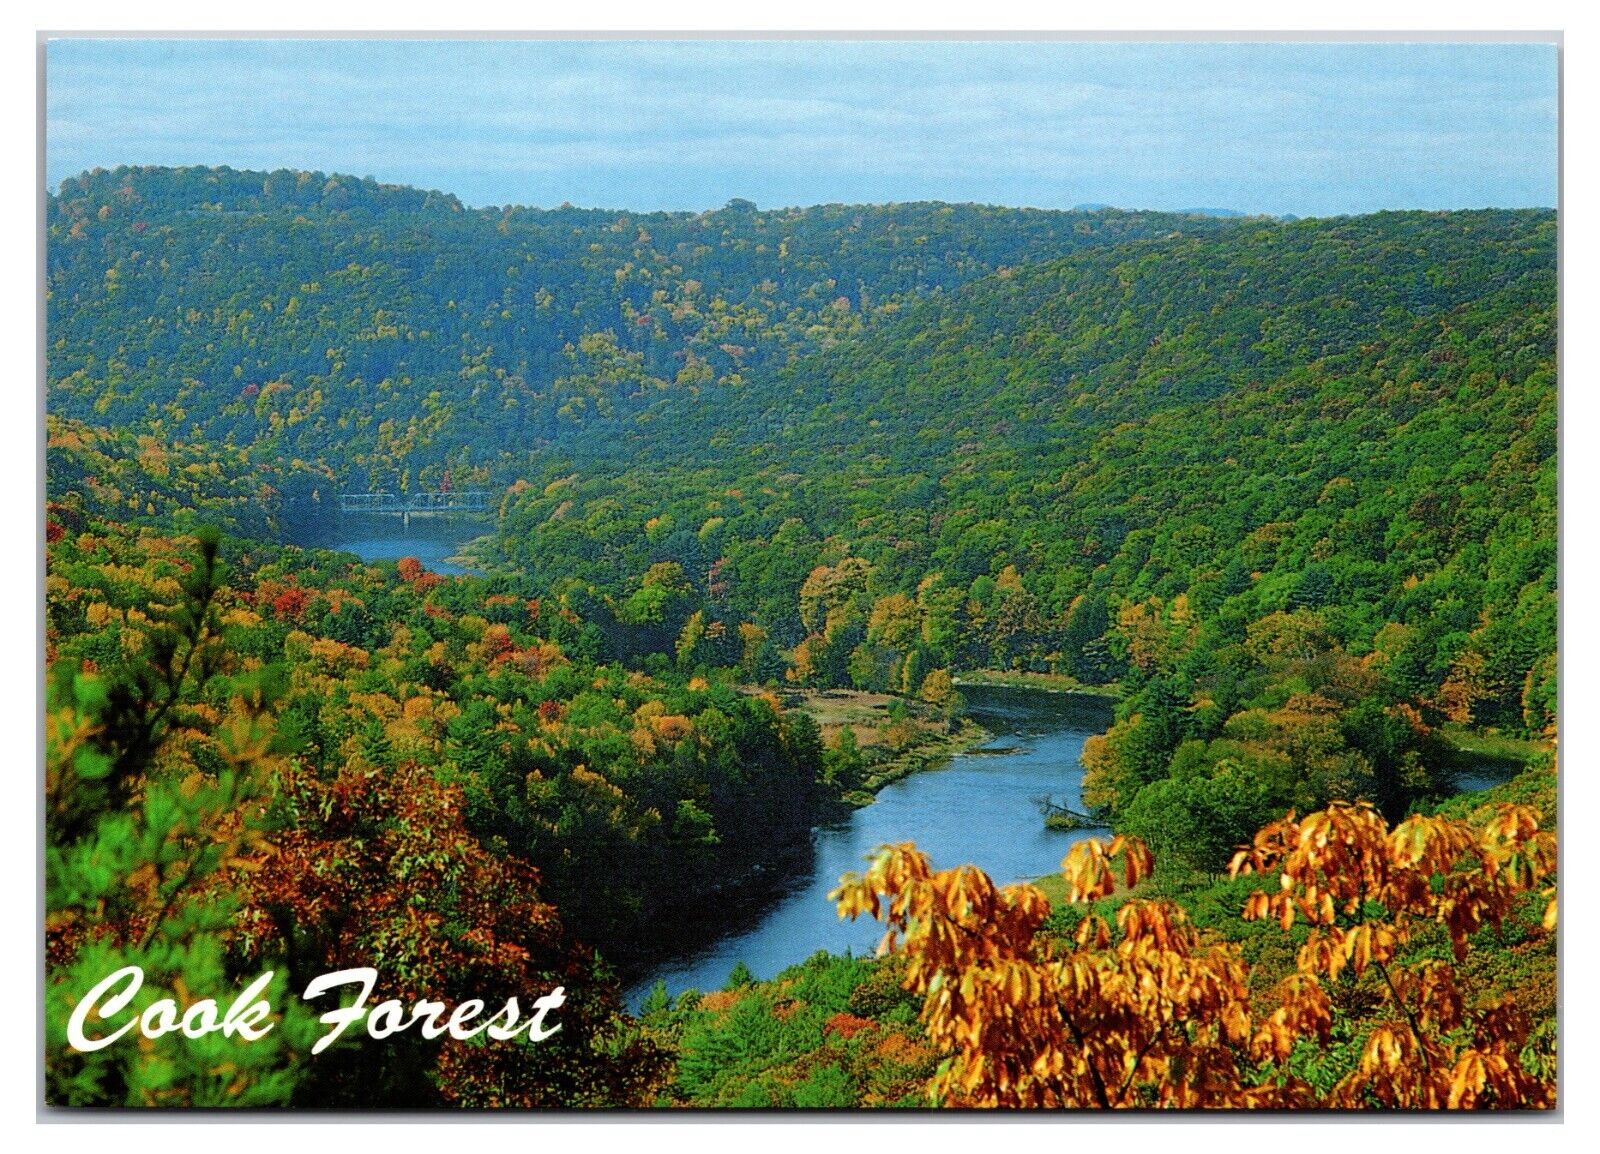 Vintage 1990s - Seneca Point - Cook Forest, Pennsylvania Postcard (UnPosted)